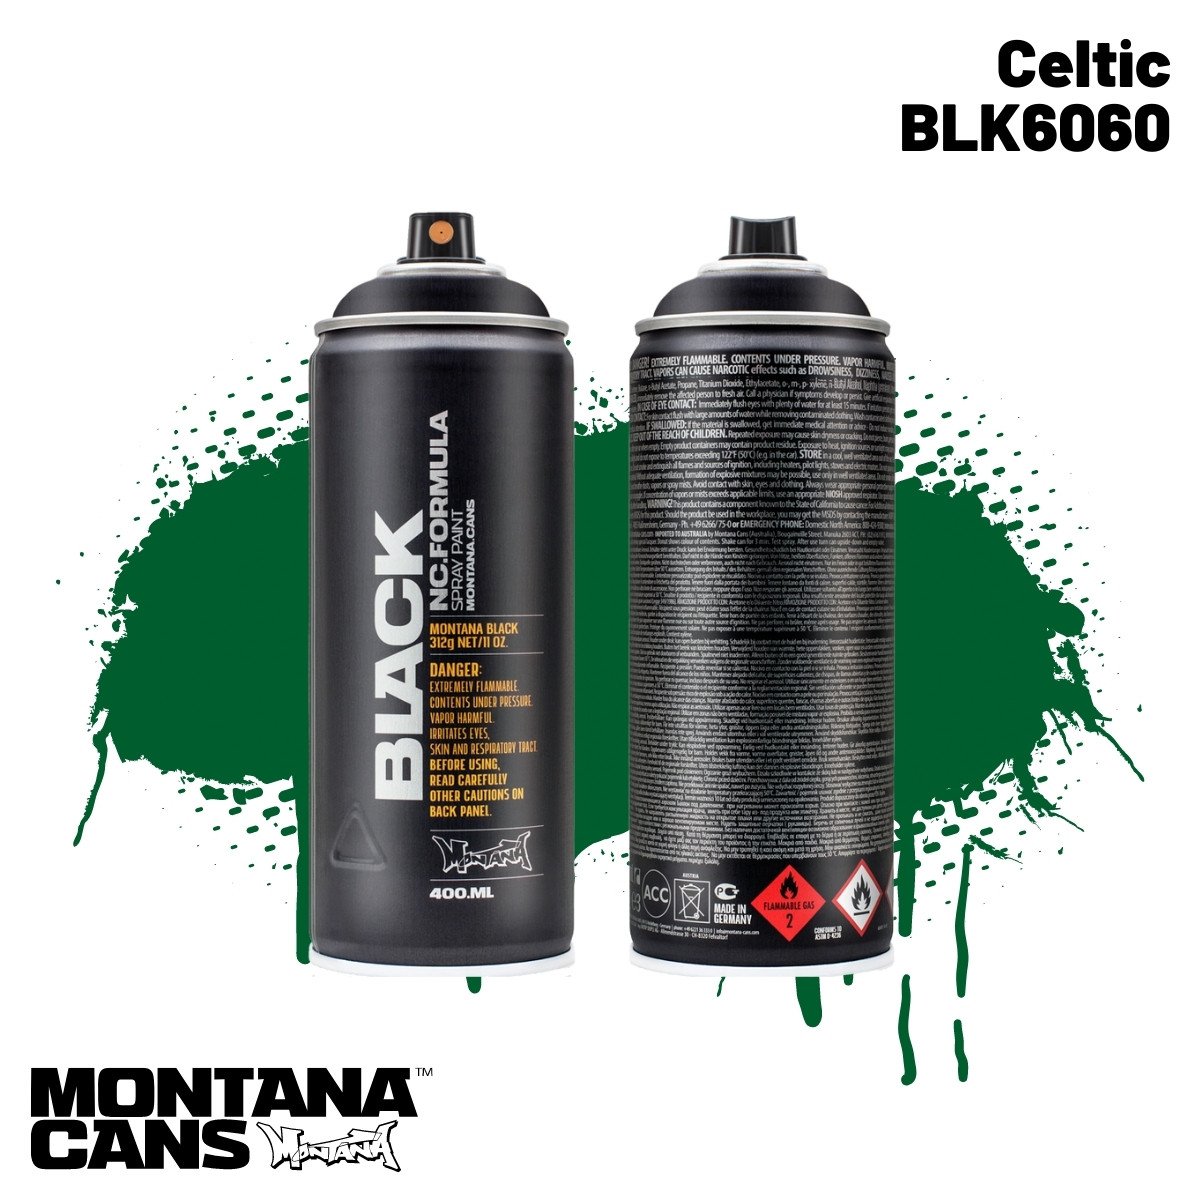 Montana Black Sprey Boya 400ml BLK6060 Celtic